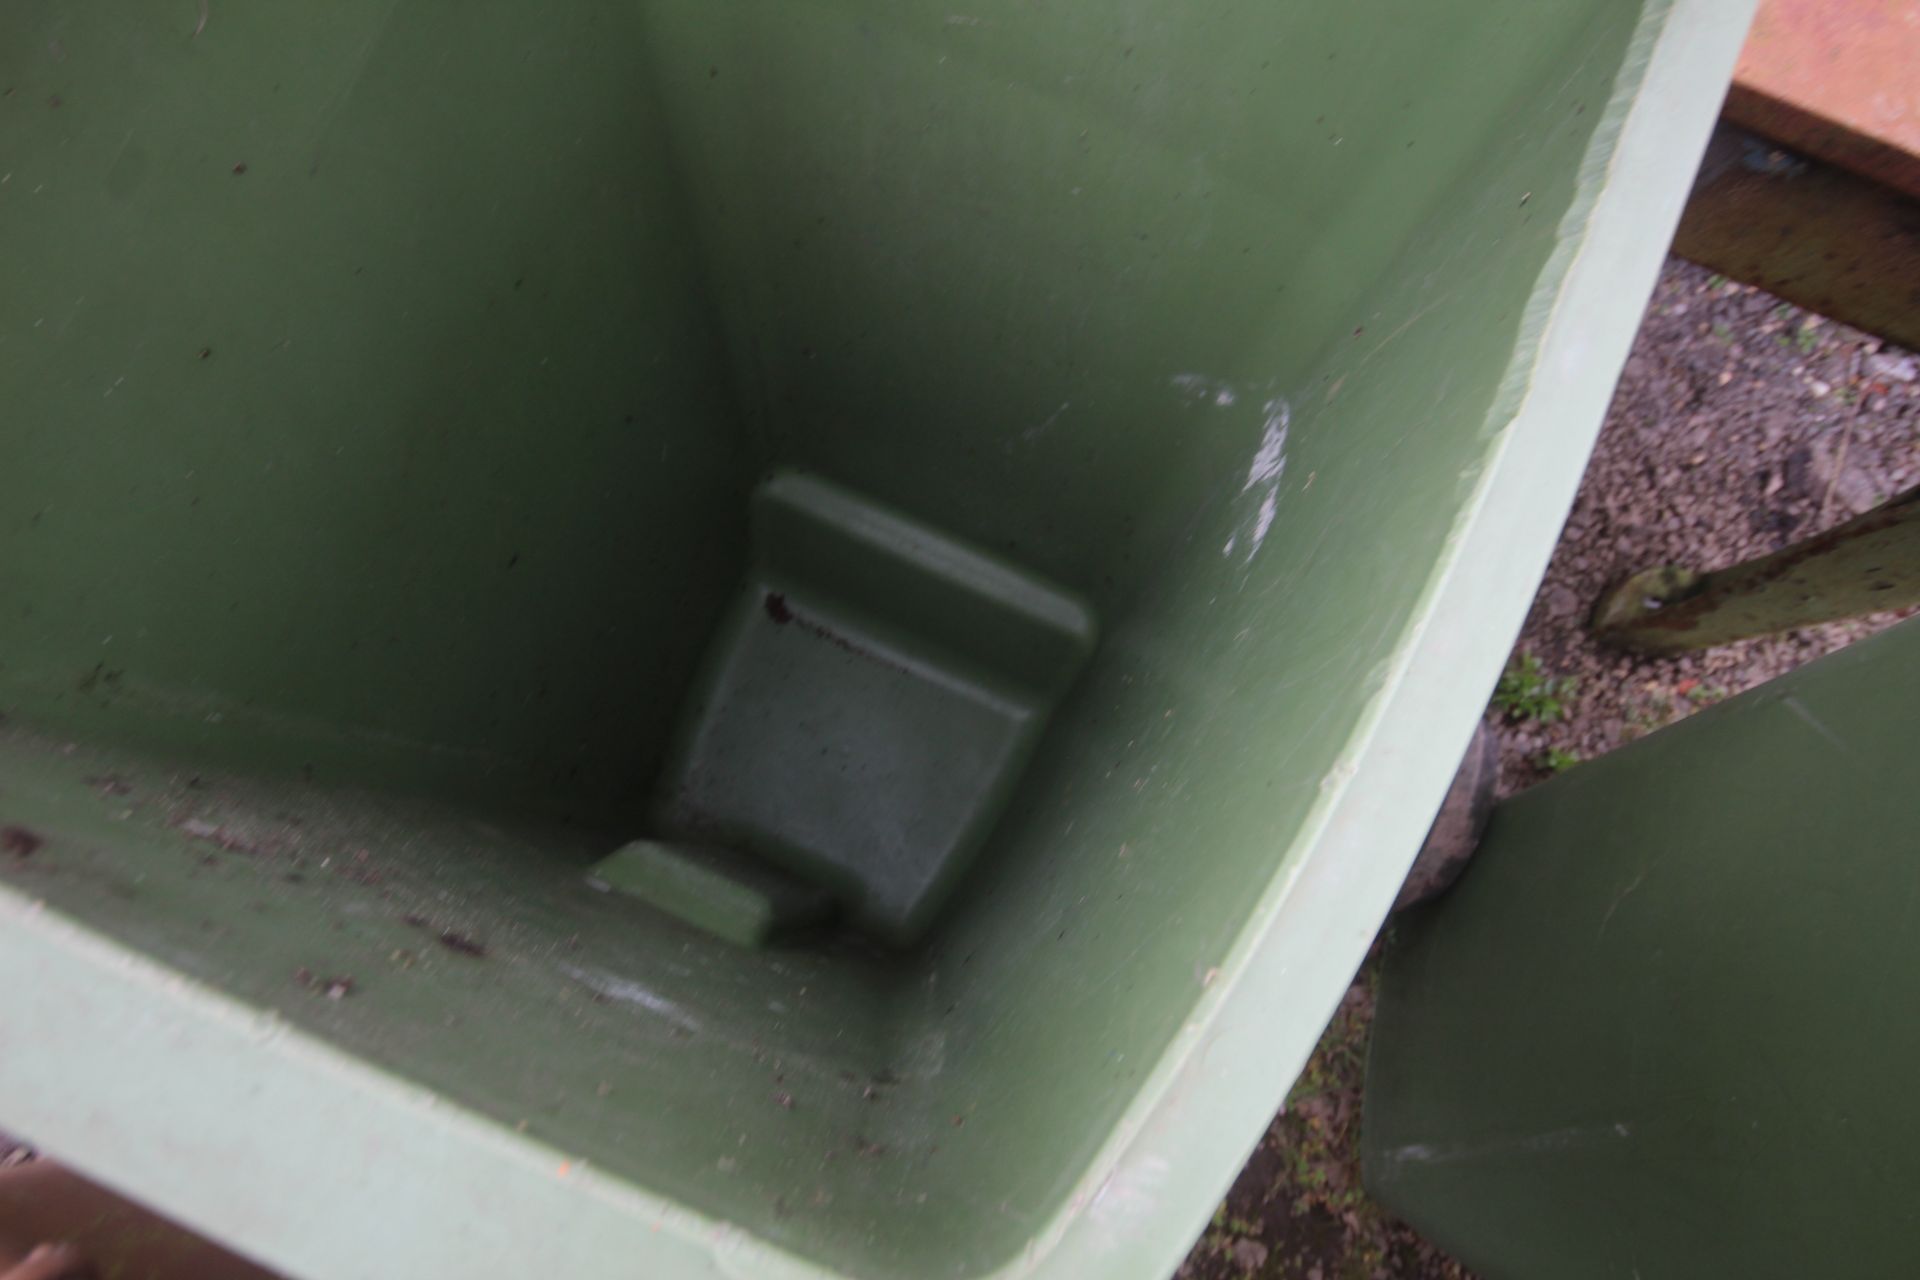 Green and brown wheelie bins. - Image 4 of 4